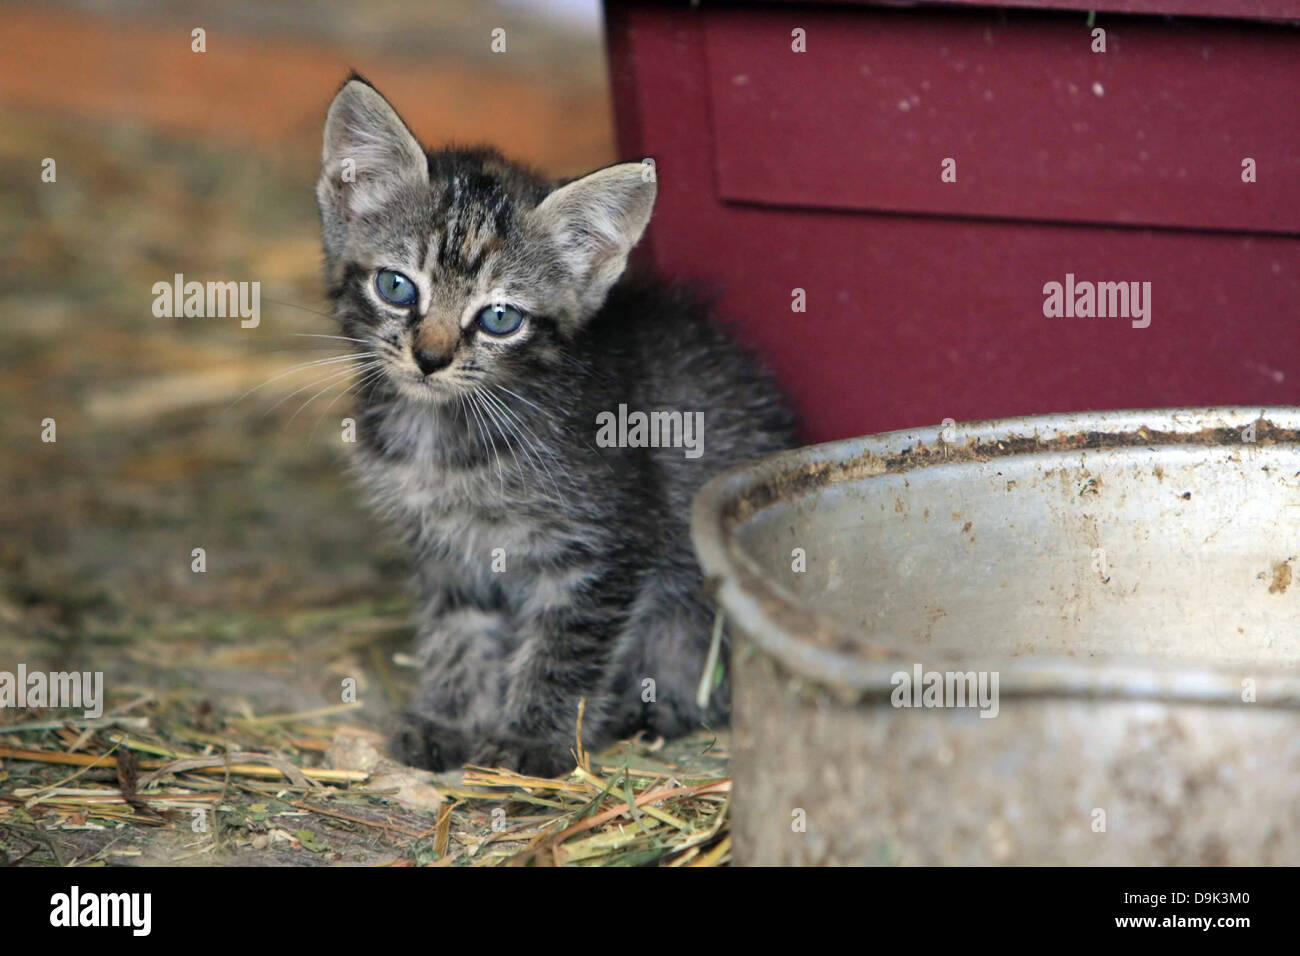 cat kitten pet animal farm rural country blue eyes whiskers grey gray Stock Photo